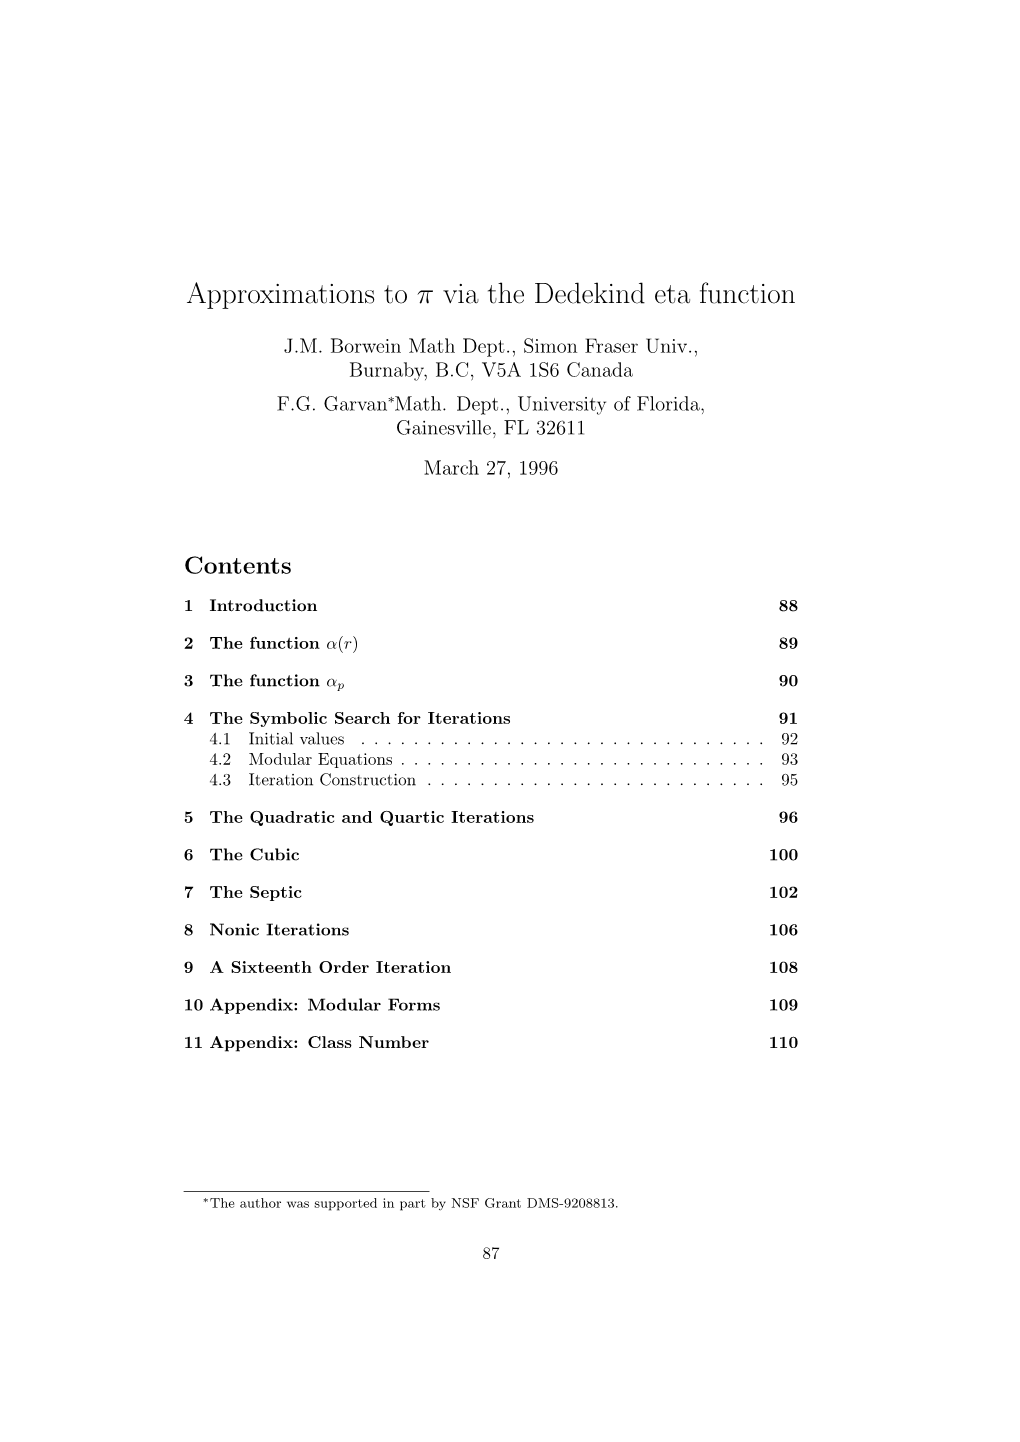 Approximations to Π Via the Dedekind Eta Function